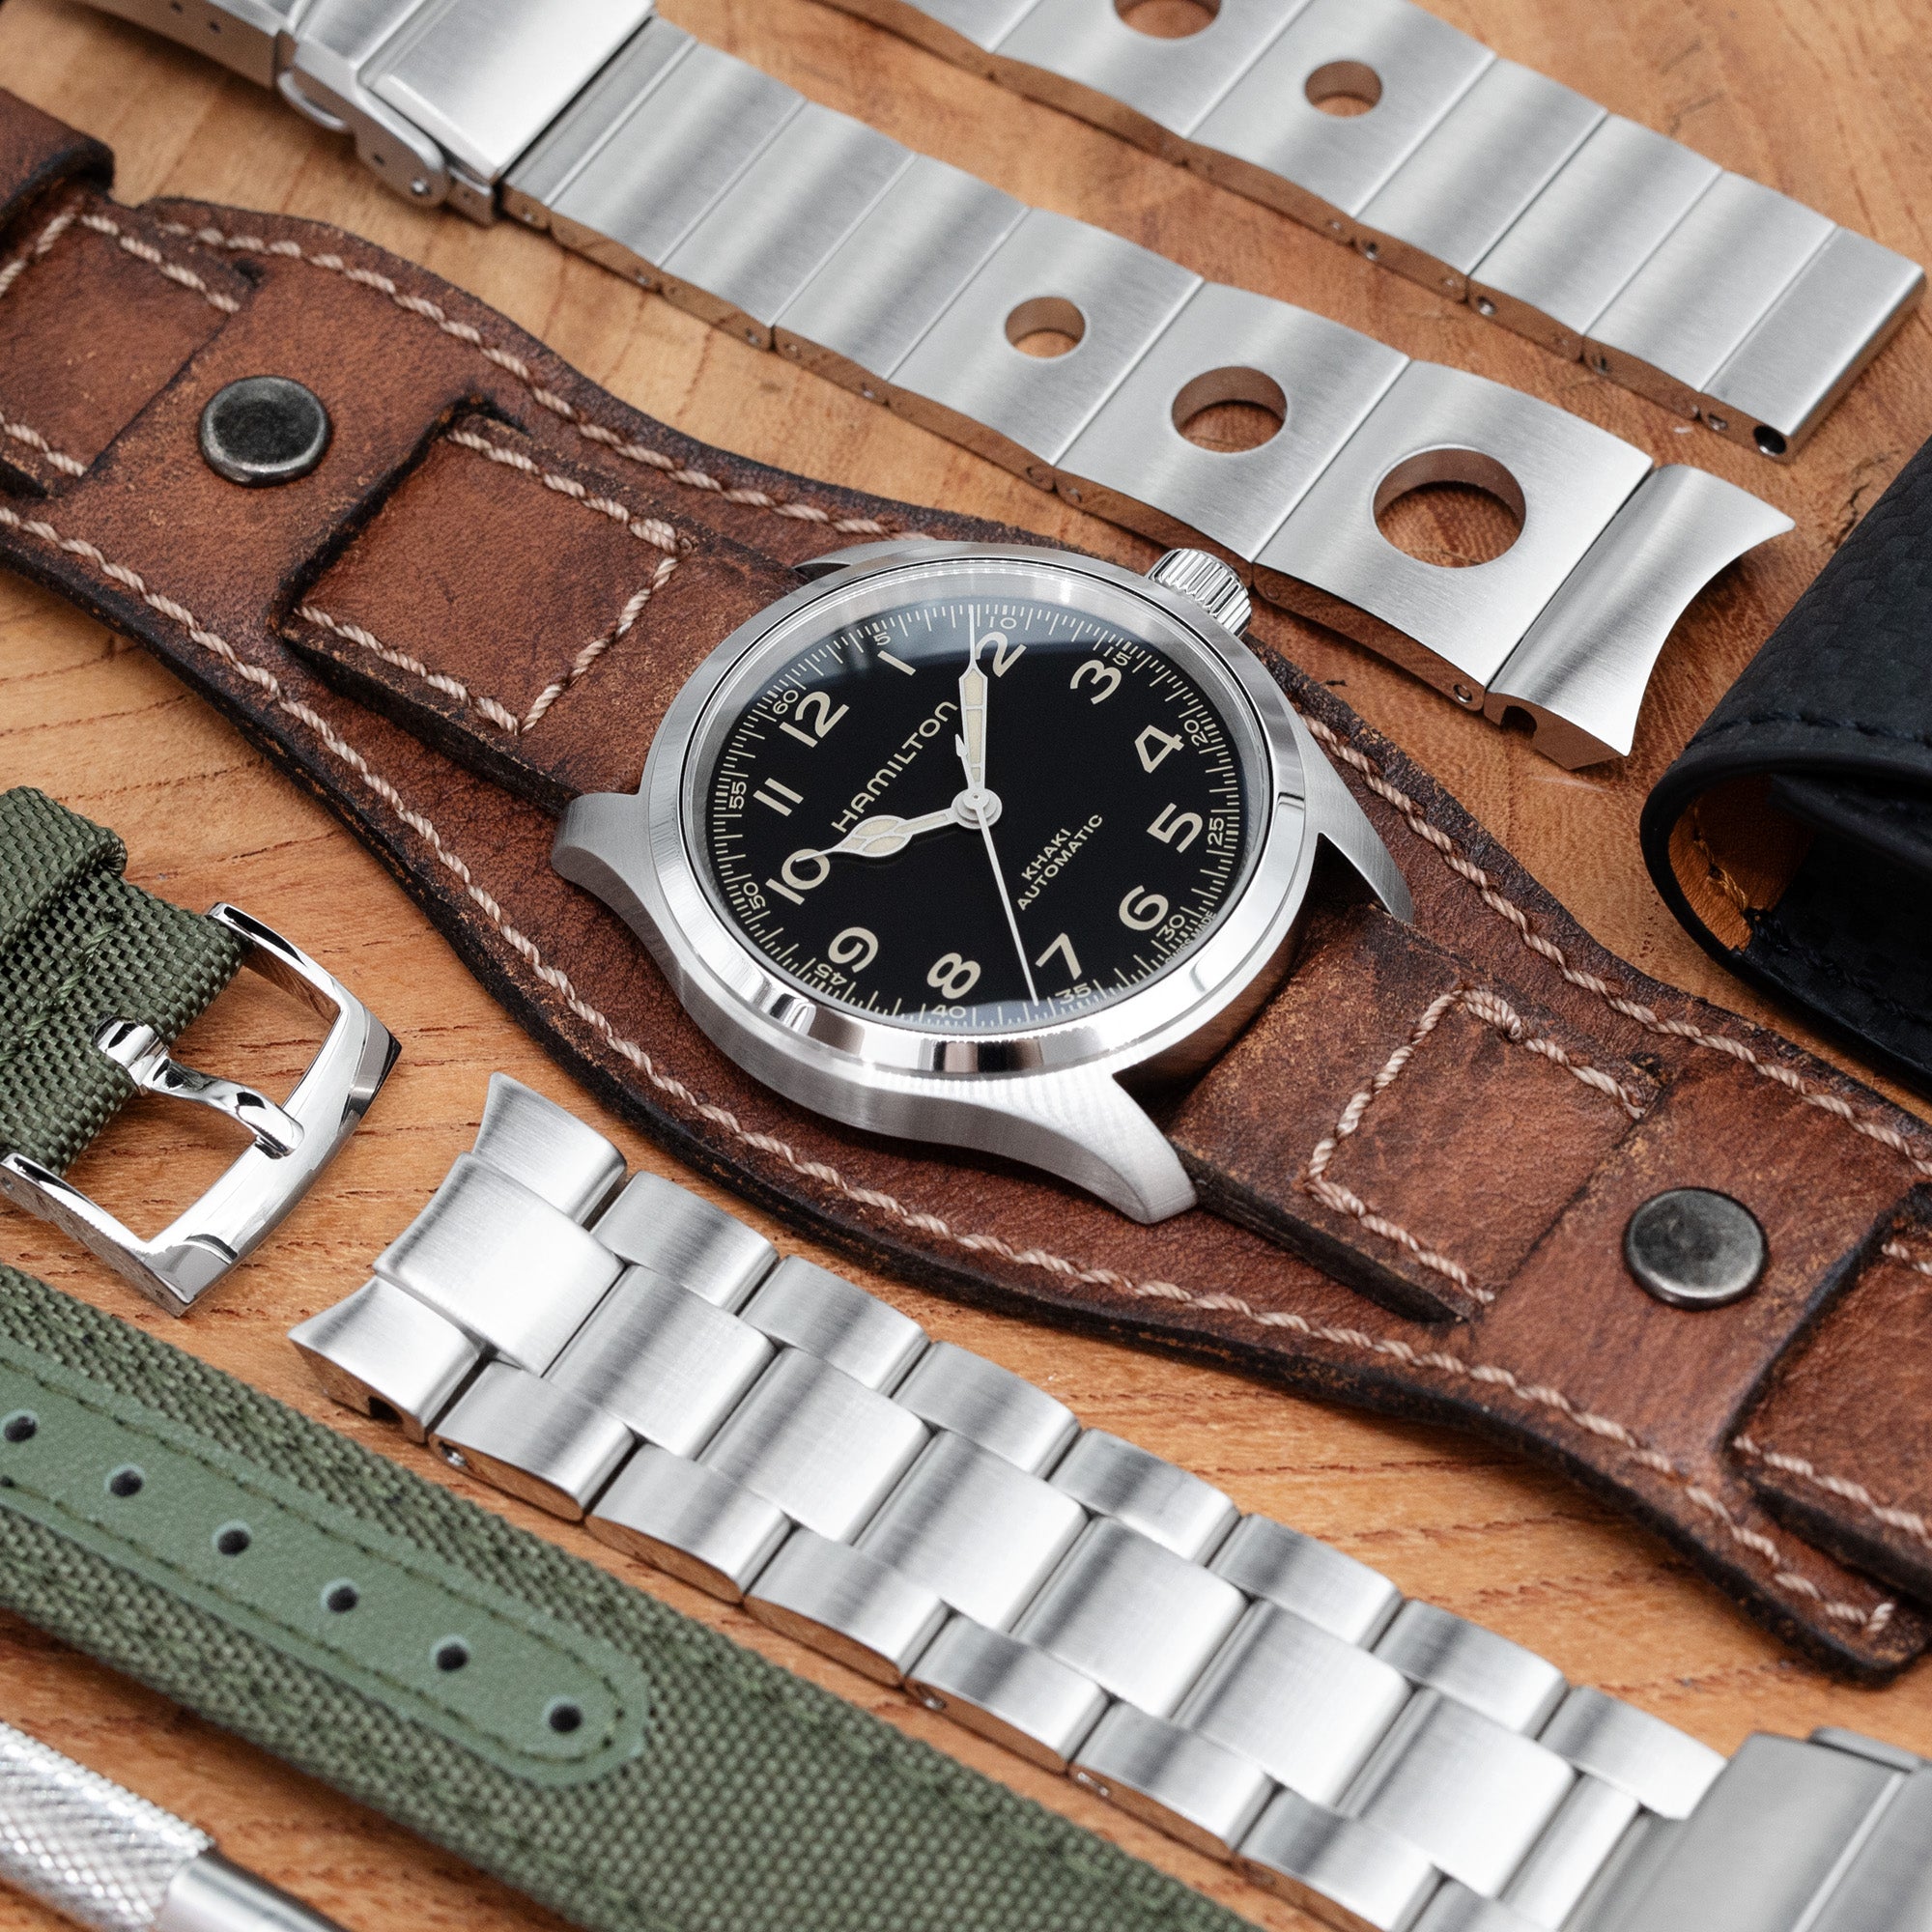 Hamilton Khaki Field Murph Automatic - The Iconic Timepiece from “Interstellar”